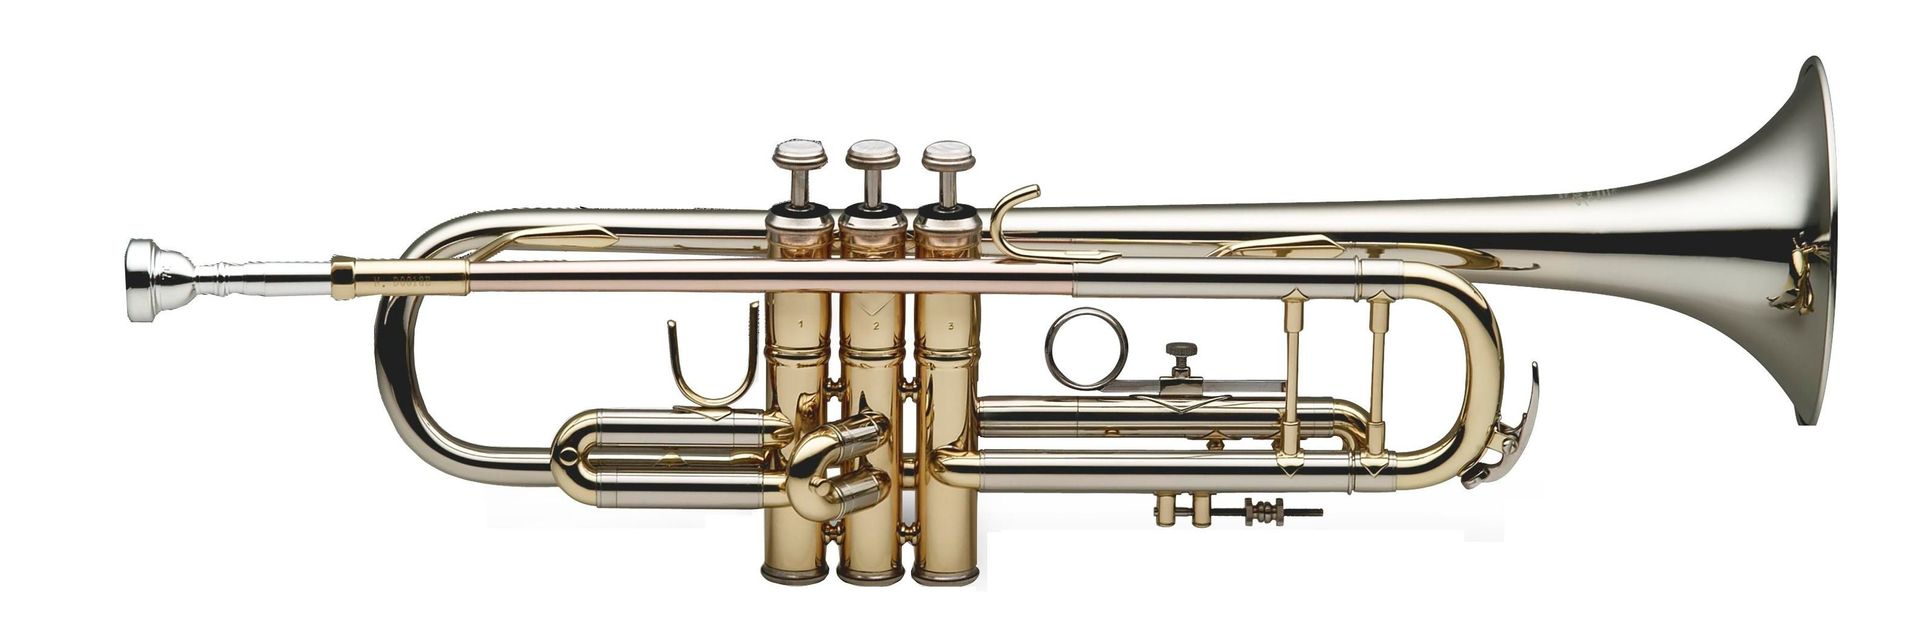 SWING TR-202-NS B-Trompete  Neusilber Schallbecher lackiert, Bohrung 11,66mm